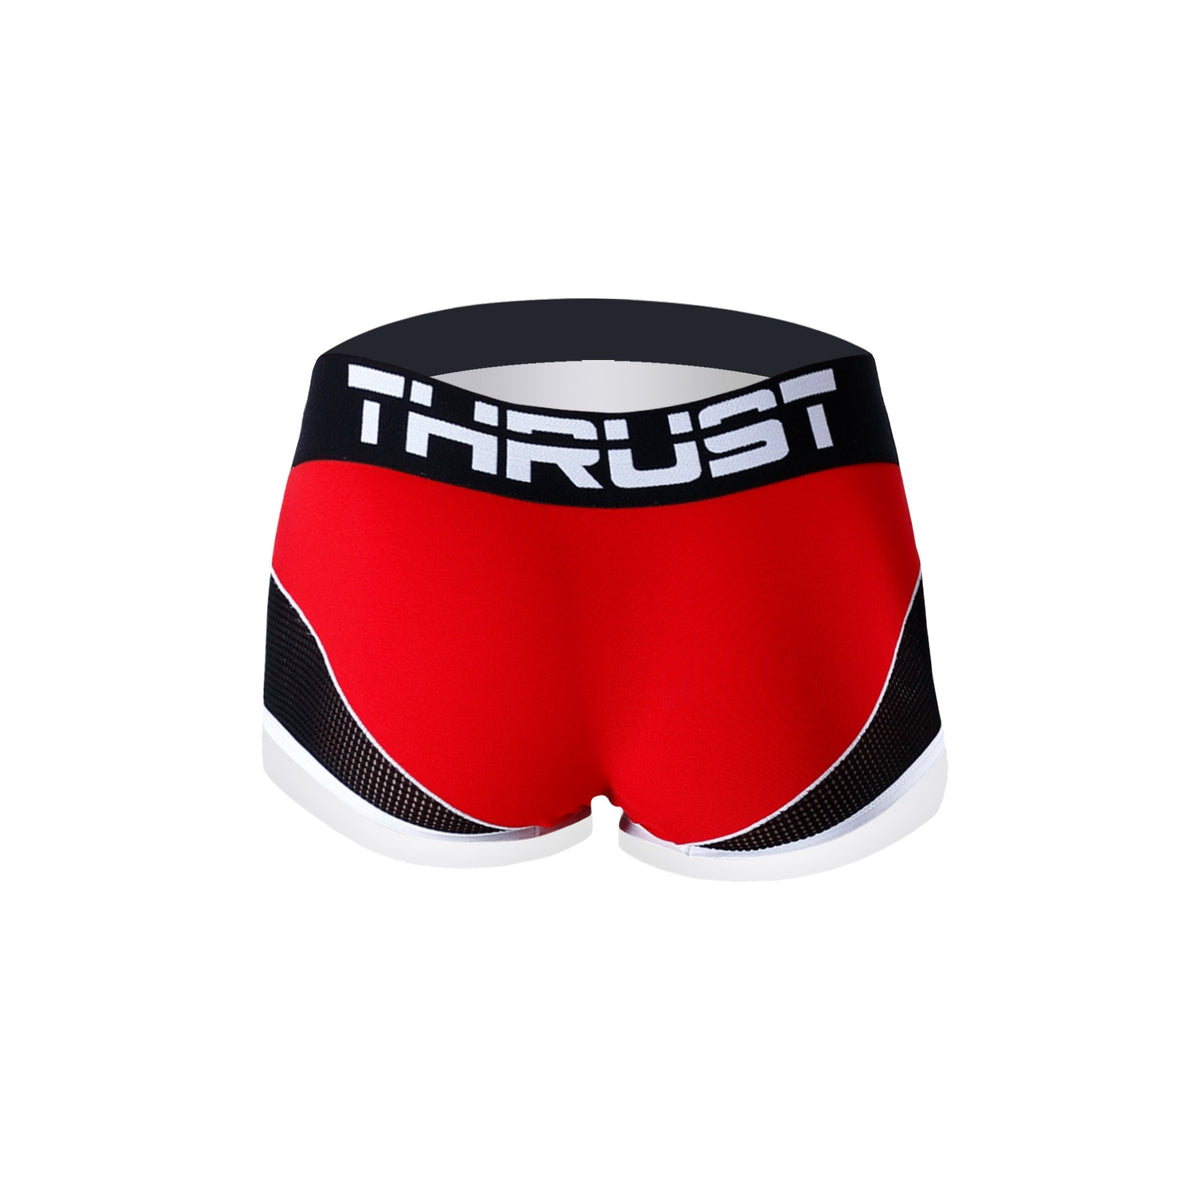 Thrust Red Sport Mesh Trunk